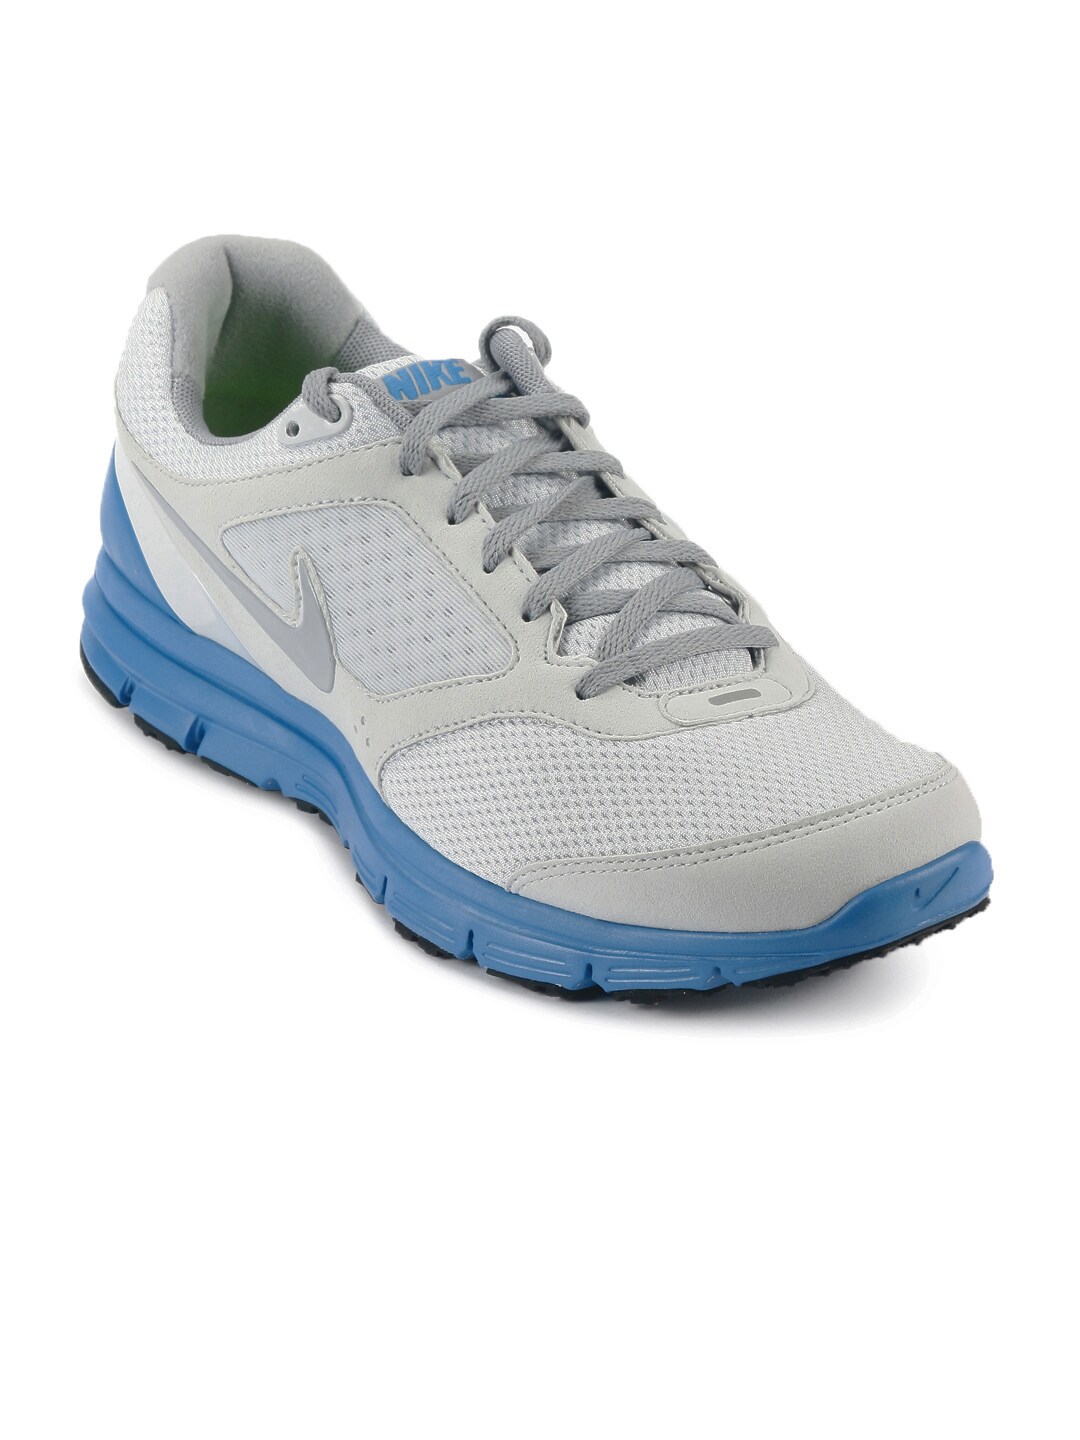 Nike Men Lunarfly+2 Grey Sports Shoes